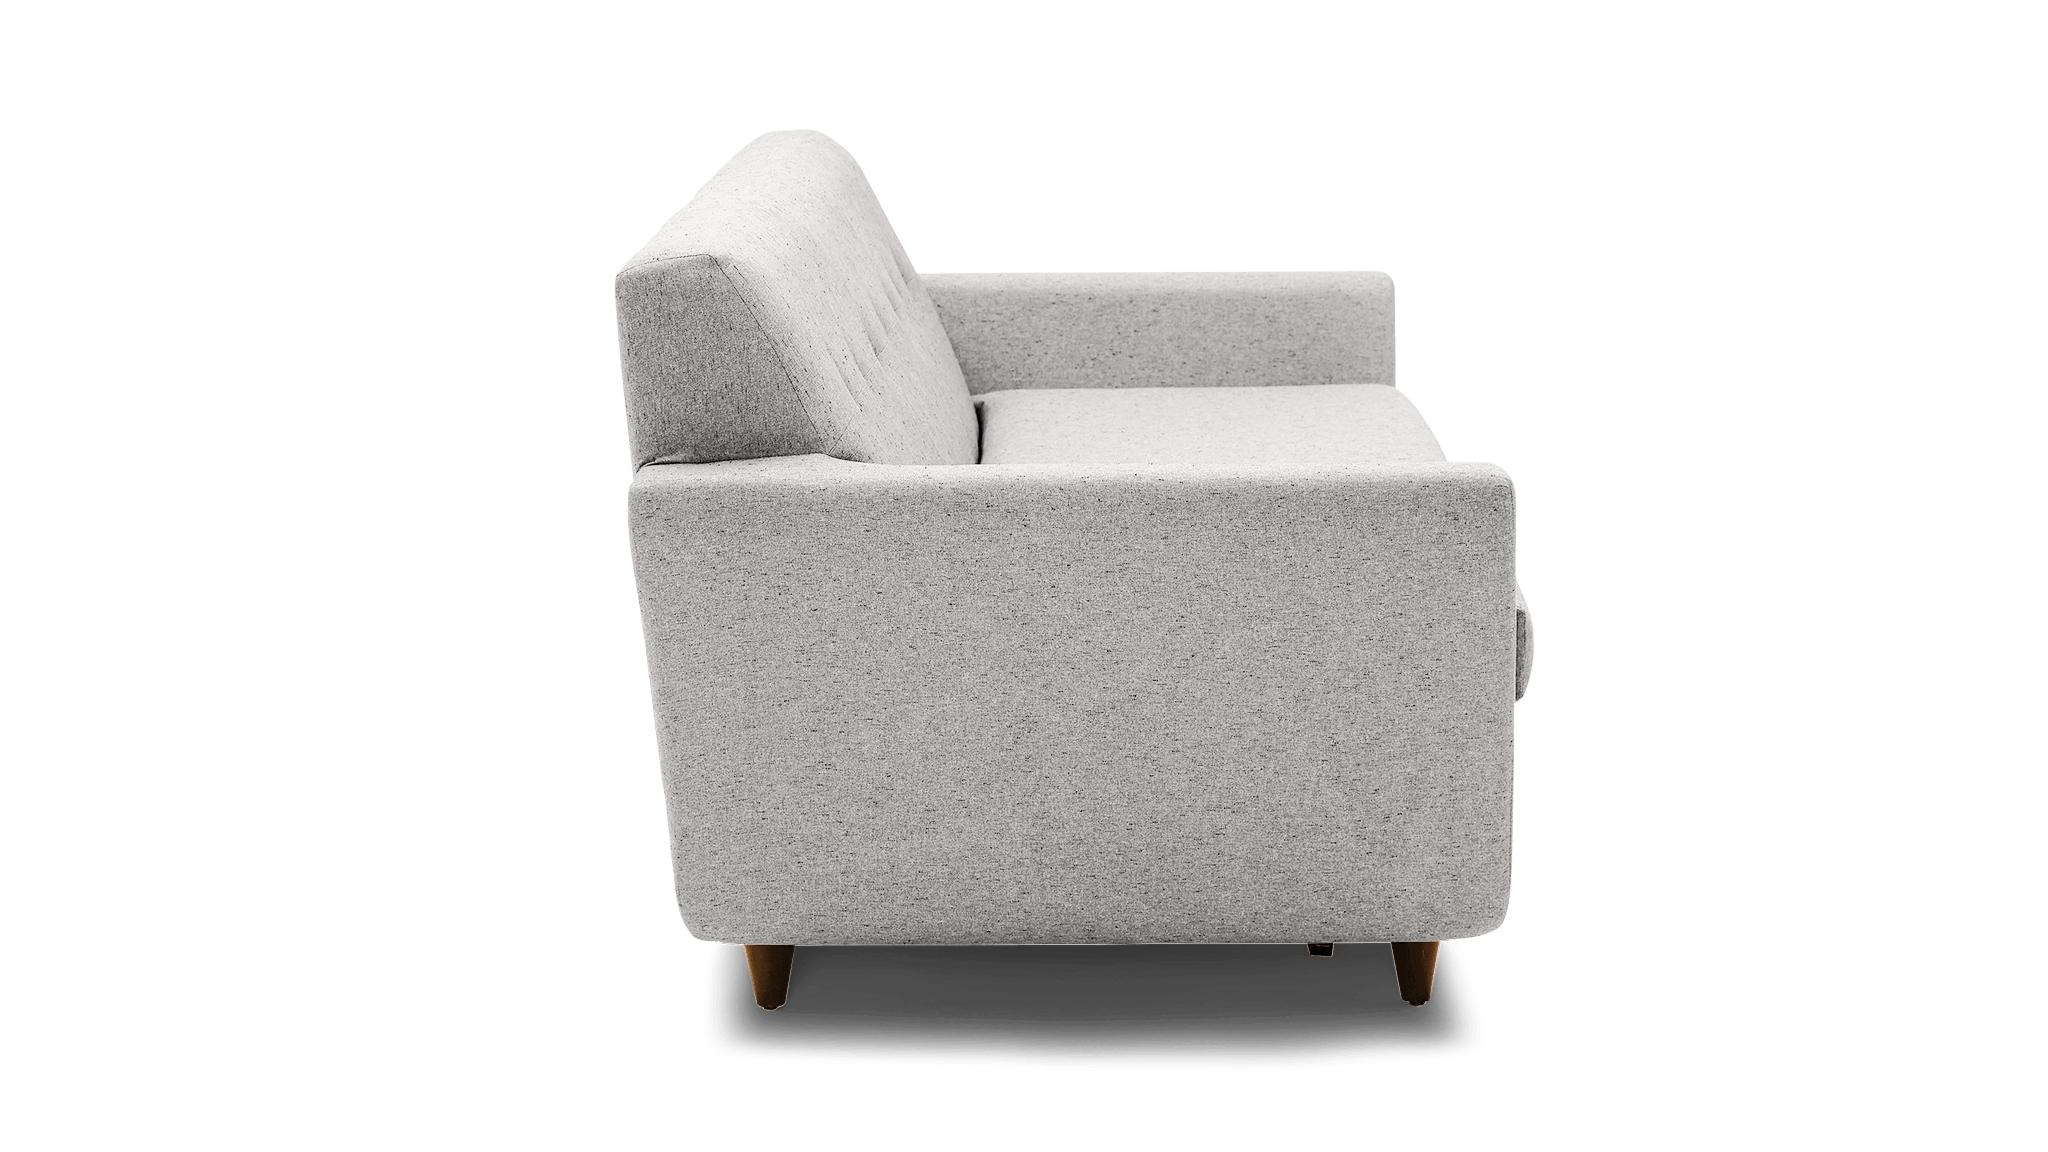 Gray Hughes Mid Century Modern Sleeper Sofa - Sunbrella Premier Fog - Mocha - Image 2